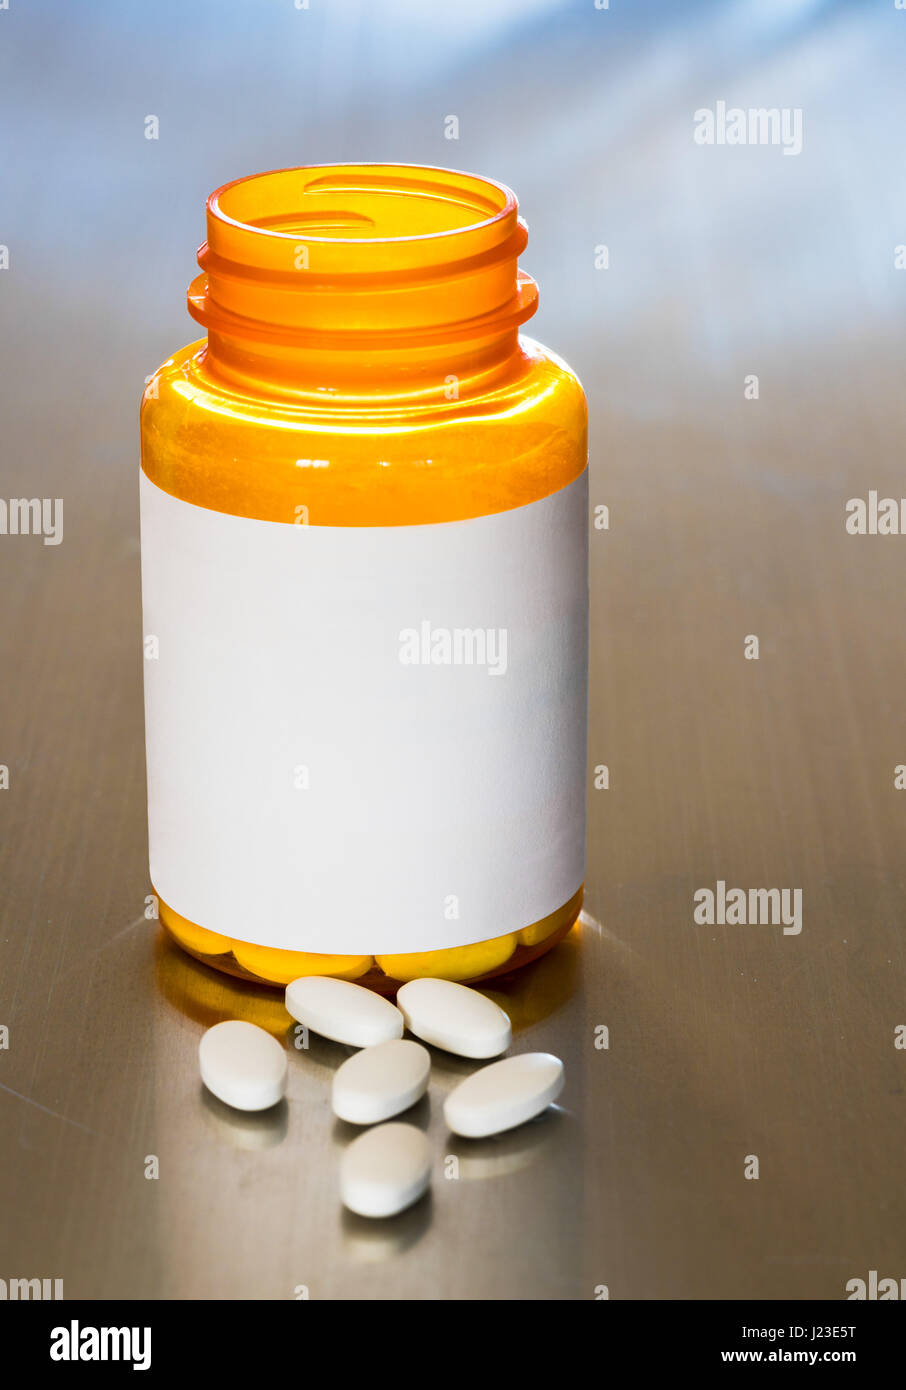 Píldora botella con etiqueta en blanco y blanco píldoras o tabletas Foto de stock